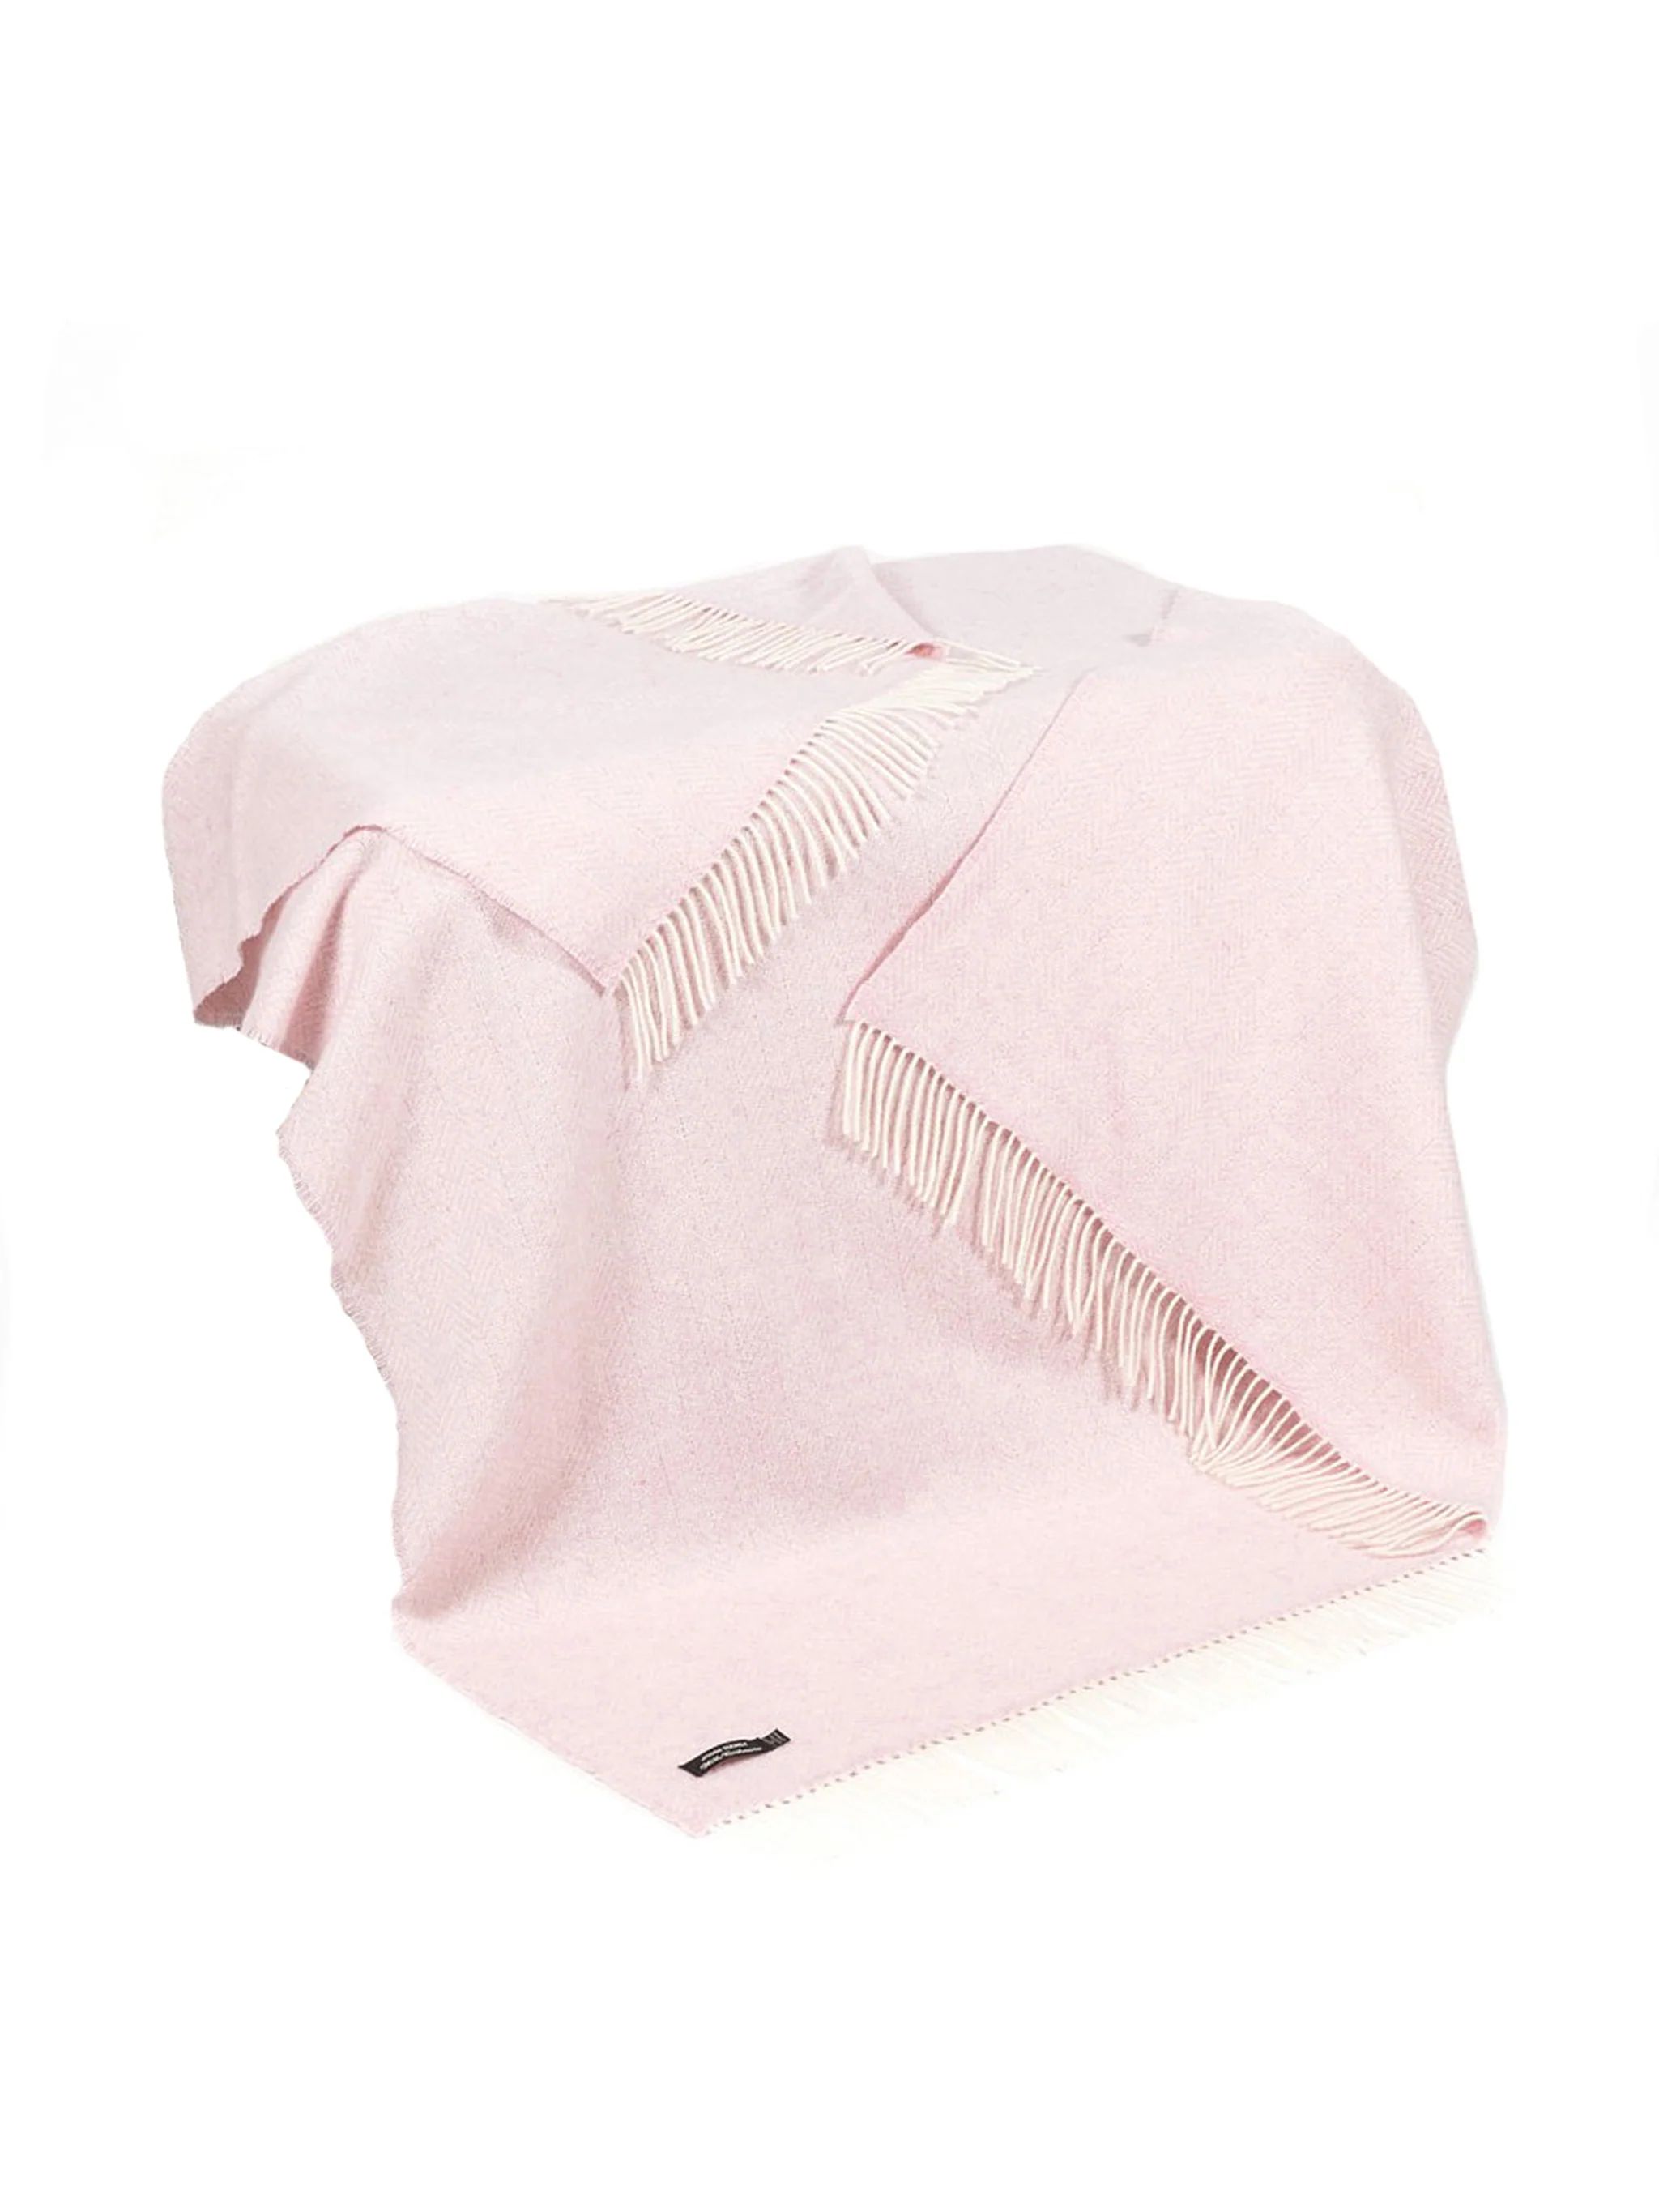 Irish Cashmere and Wool Pink Throw | Weston Table